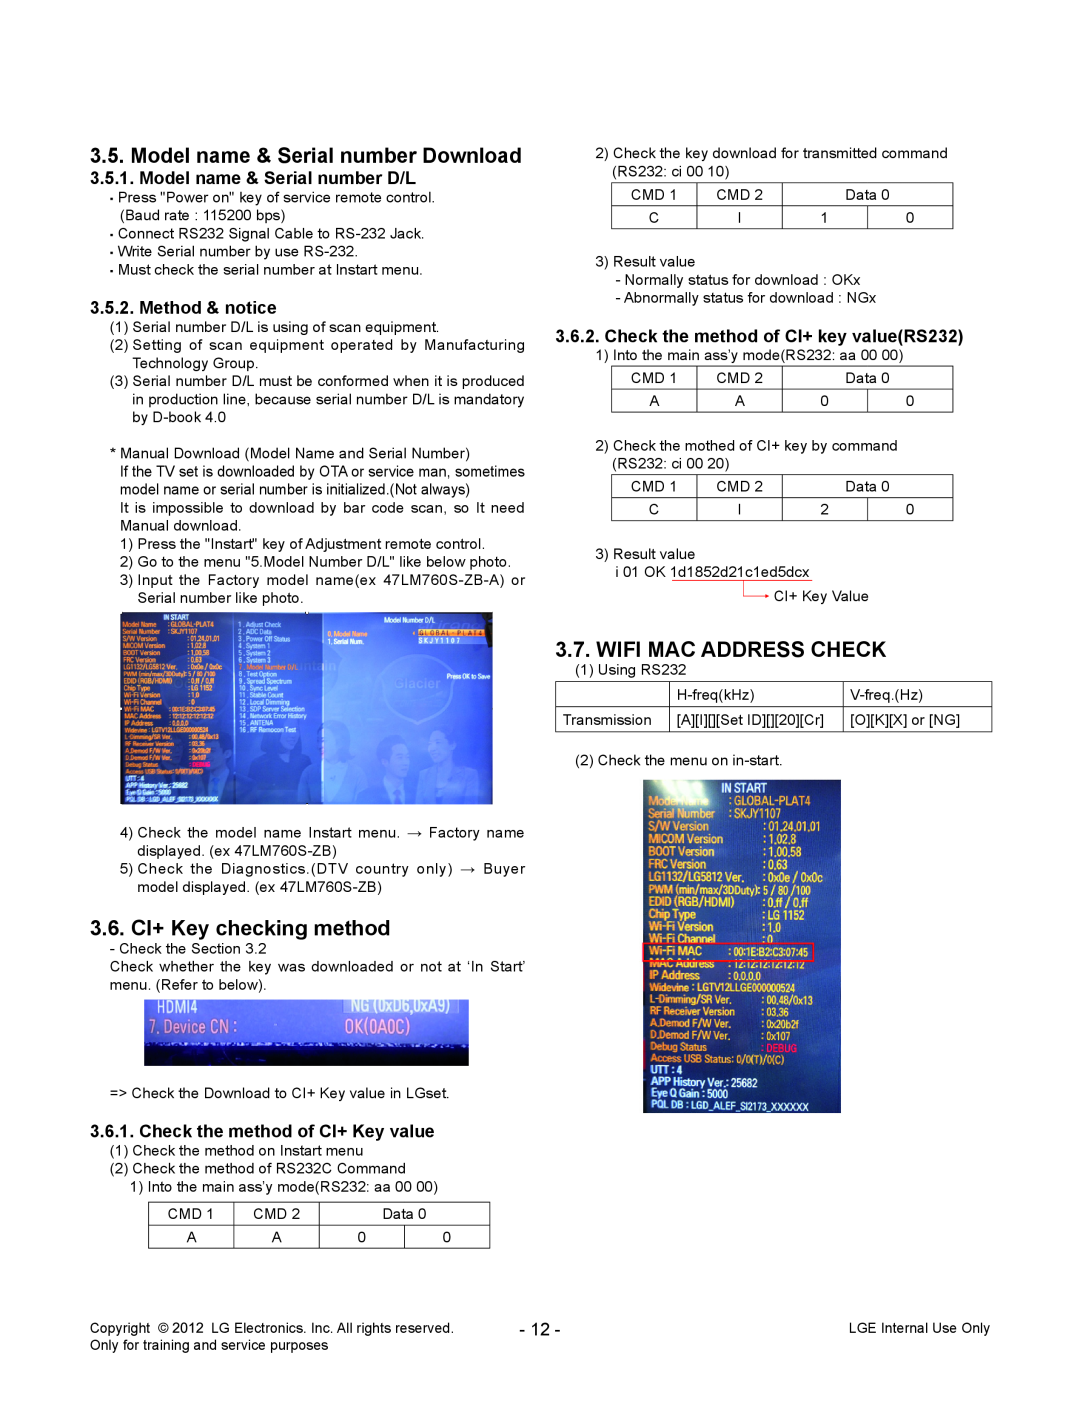 LG Electronics MFL67360901 Model name & Serial number Download, 3.6. CI+ Key checking method, Wifi Mac Address Check 